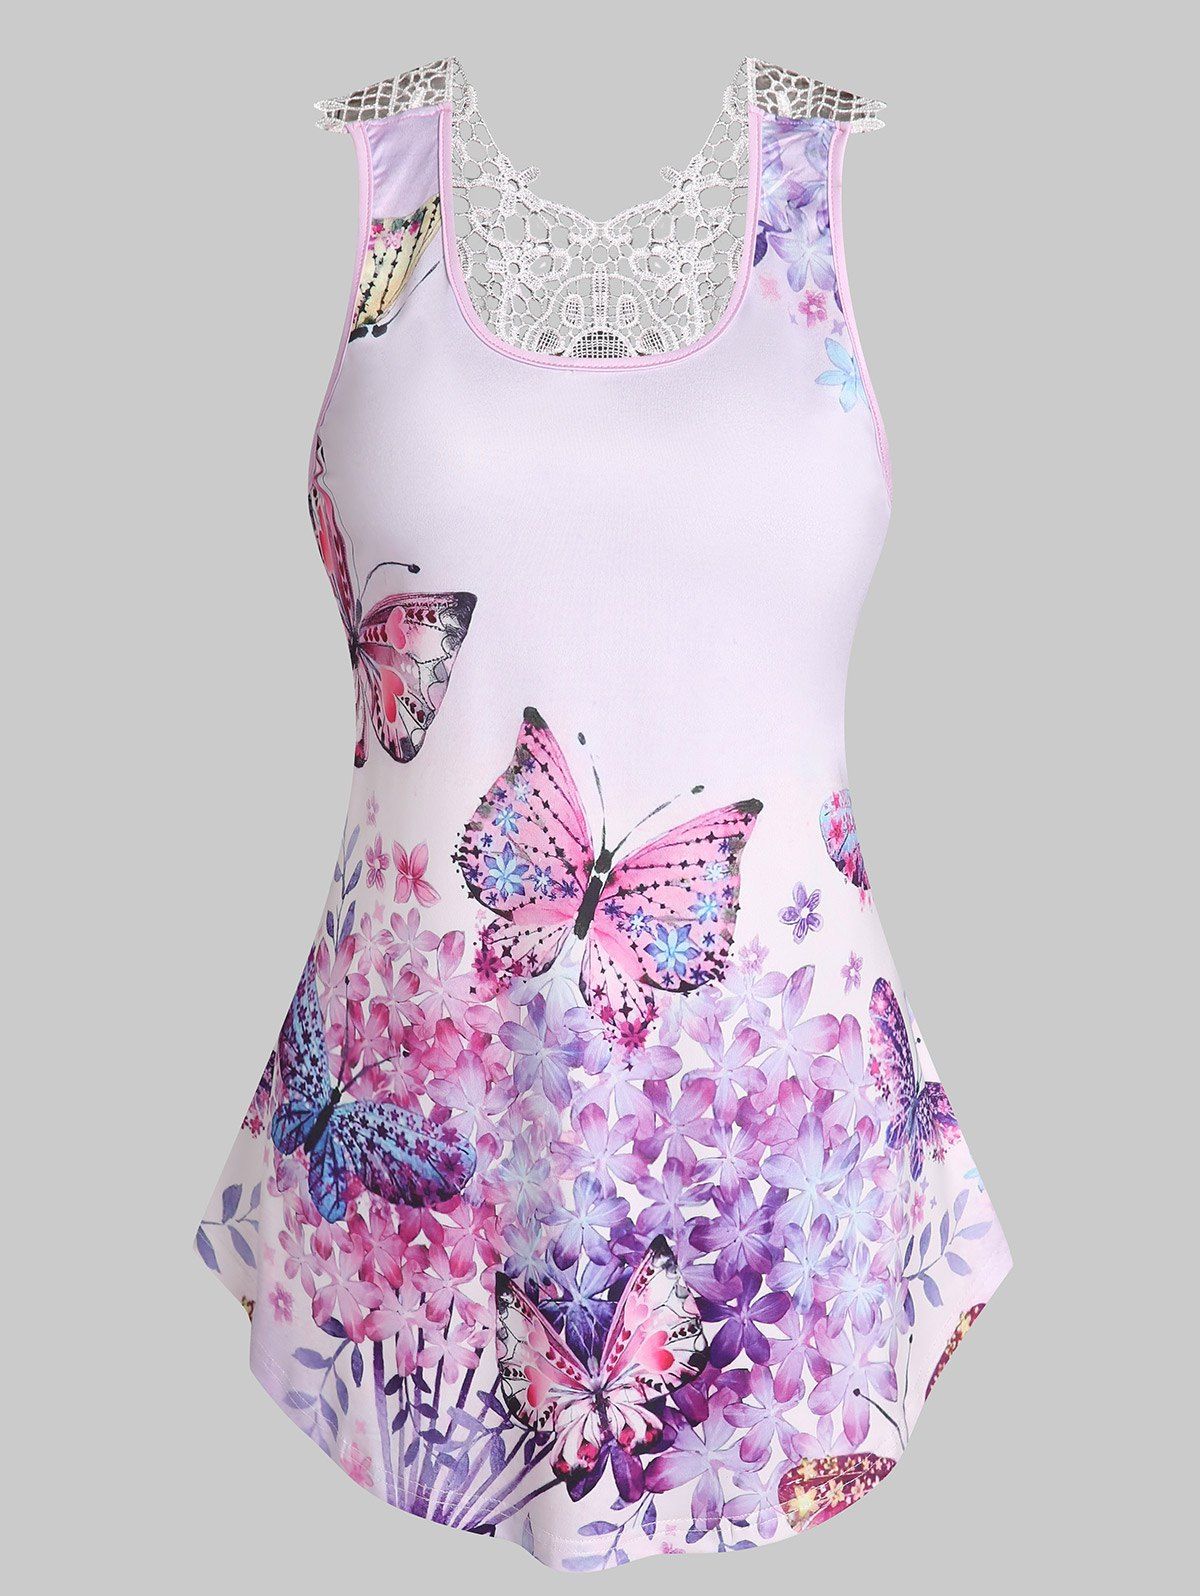 Floral Butterfly Print Lace Tank Top - LIGHT PURPLE M